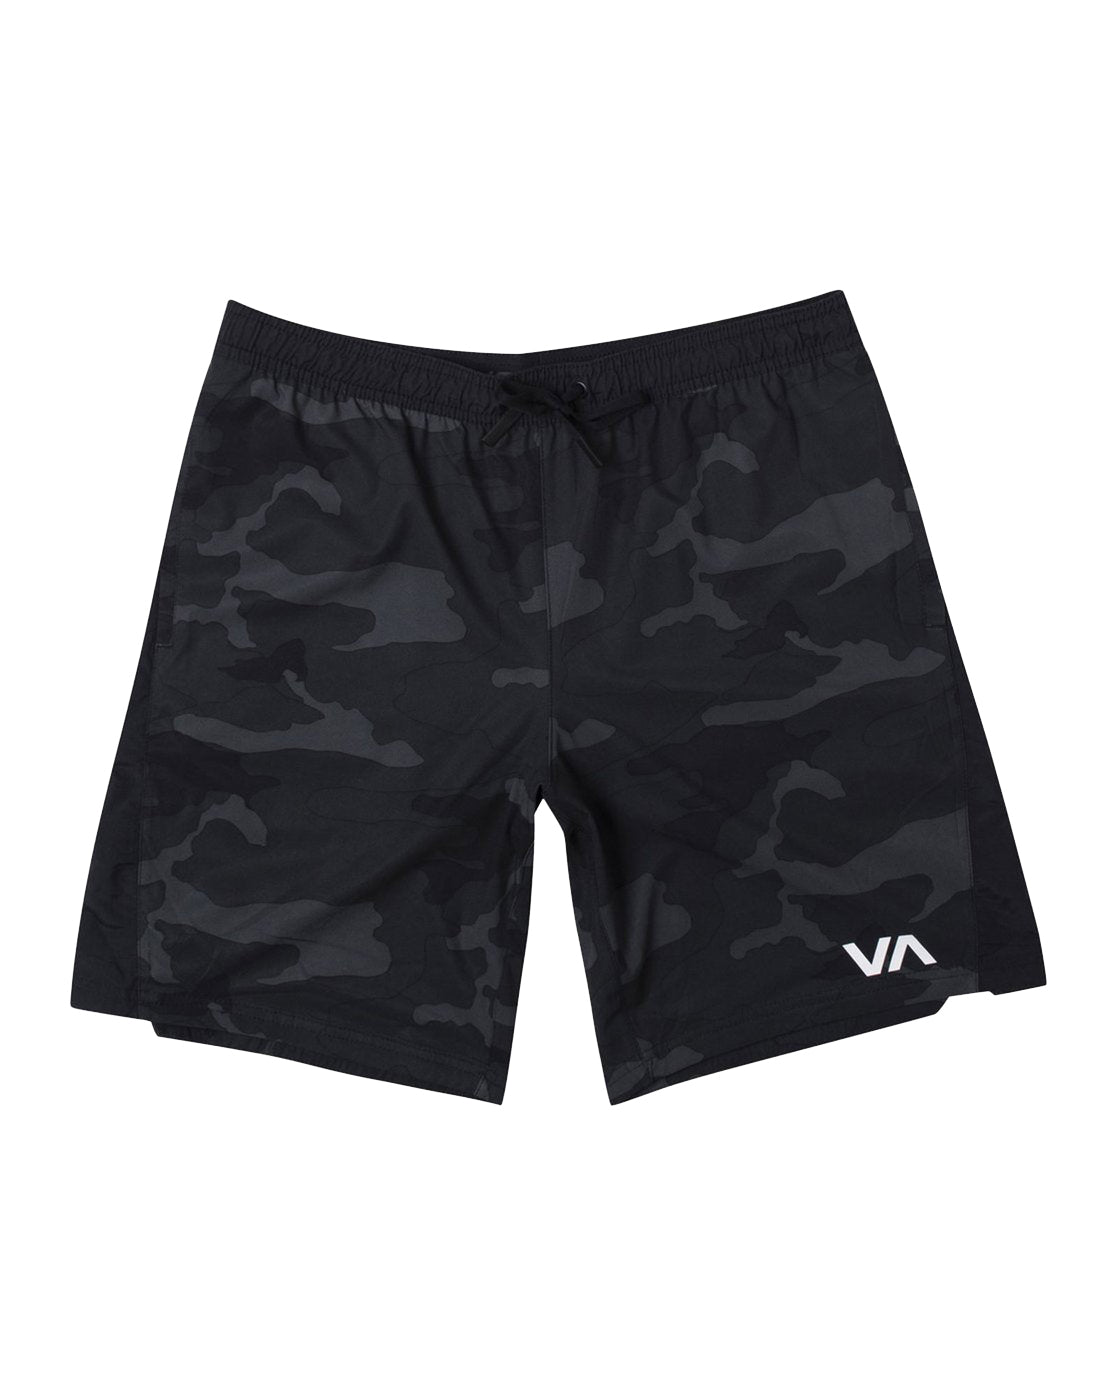 RVCA Yogger All Day Shorts CAM XL